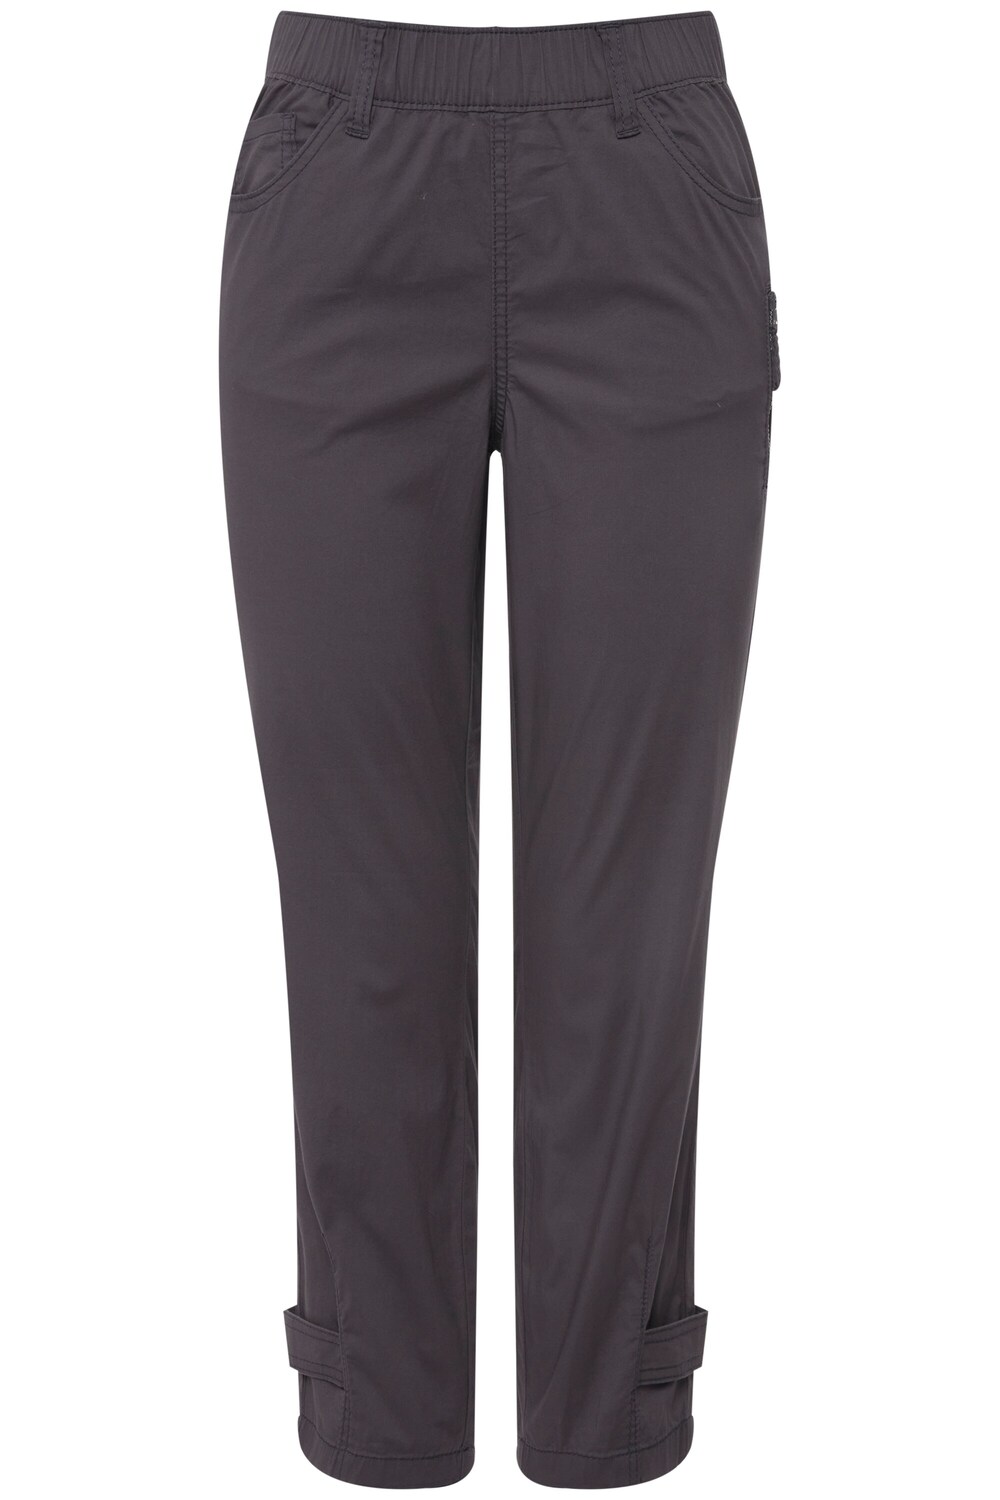 Обычные брюки Laurasøn, темно-серый